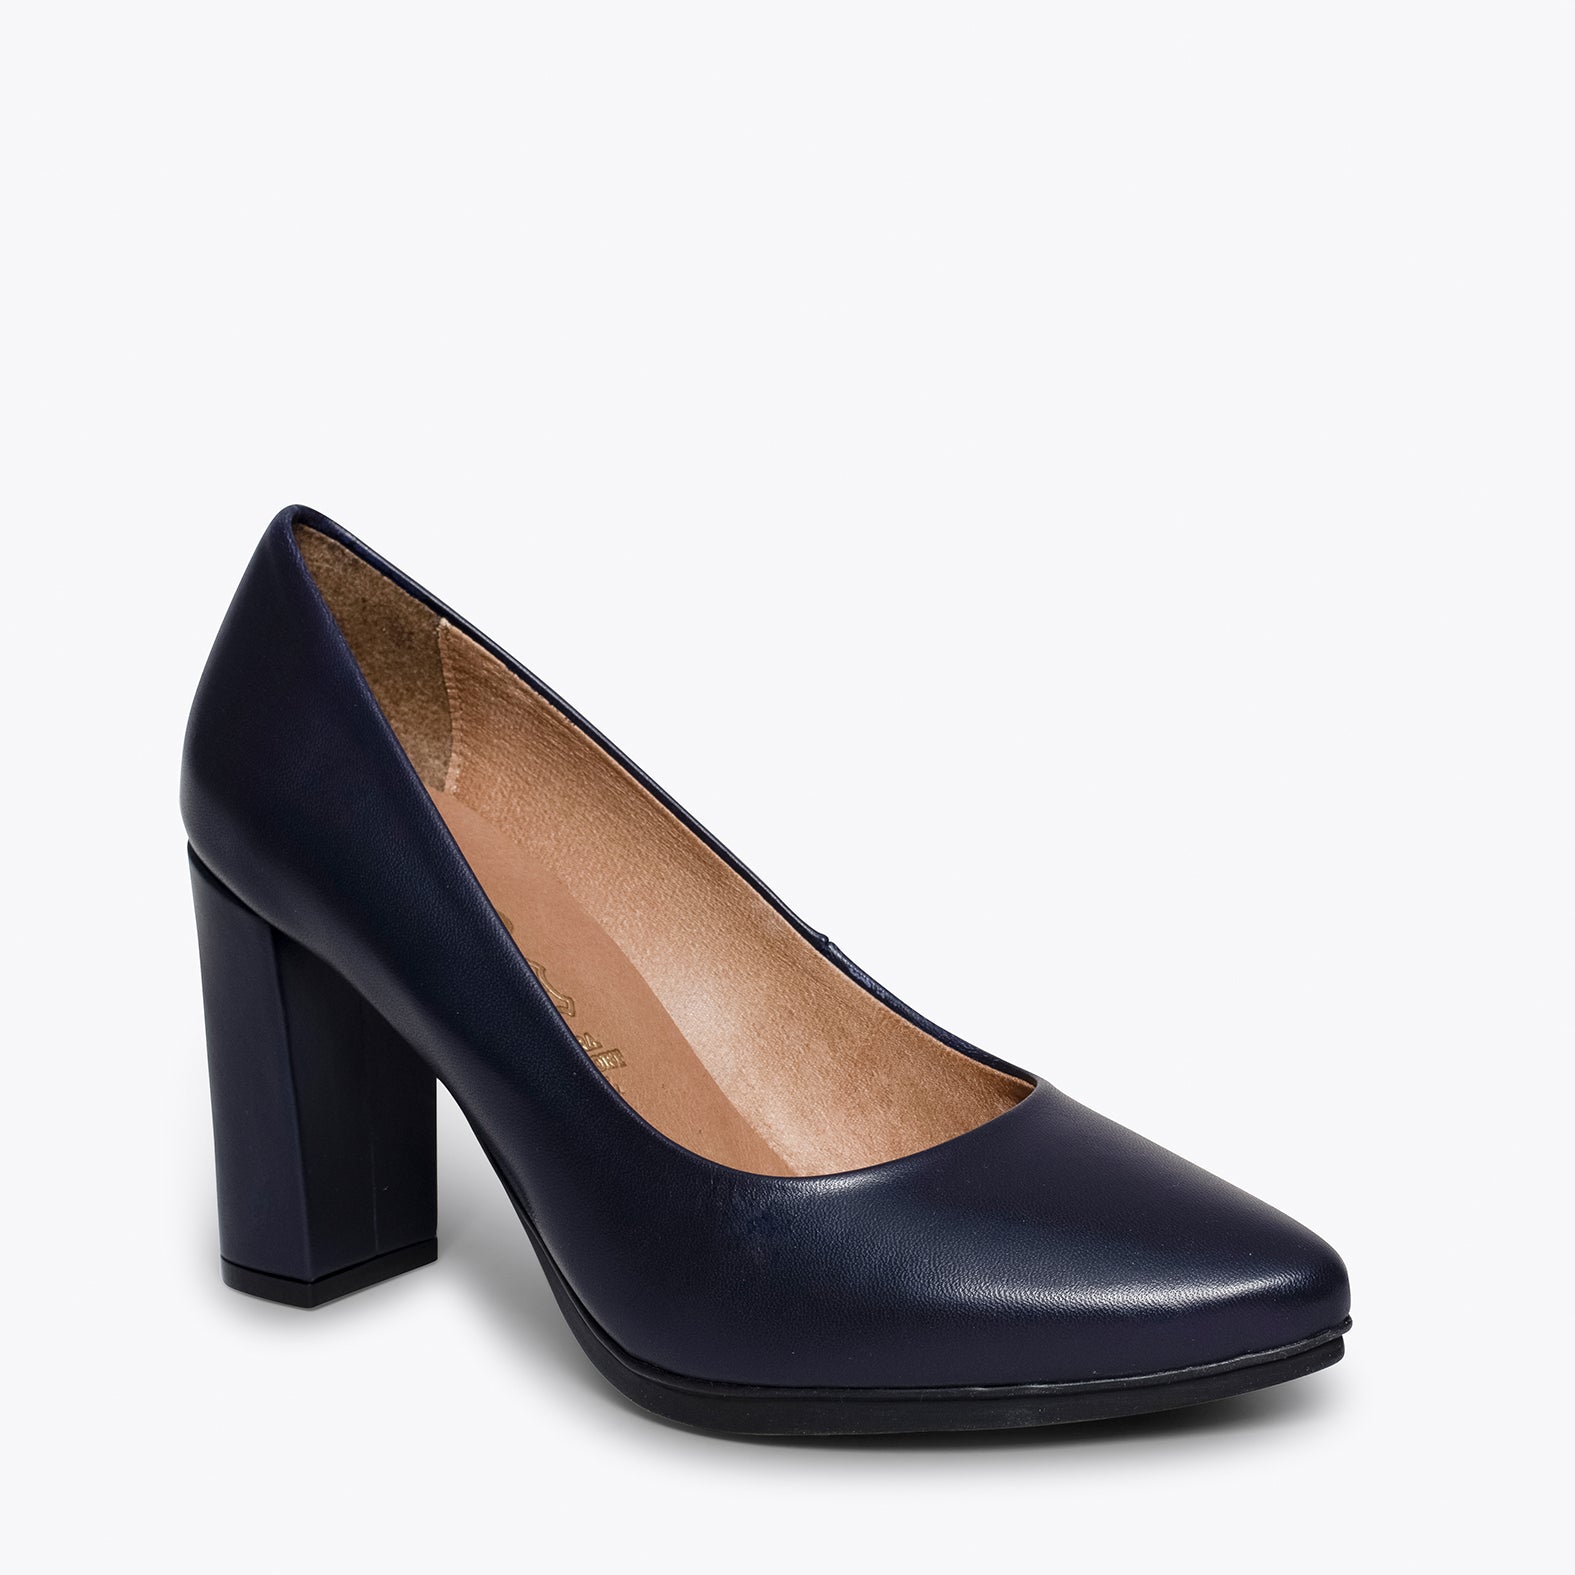 URBAN SALON – NAVY nappa leather high heel